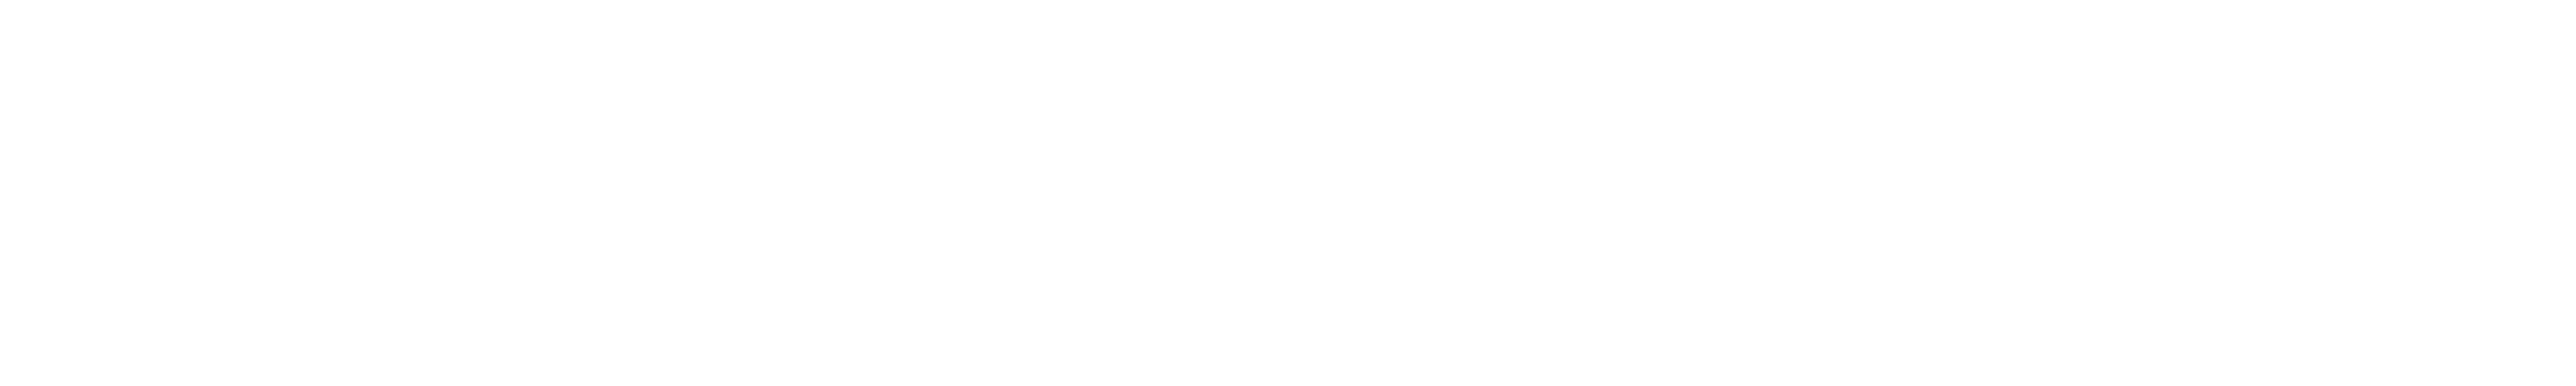 Well Health Technologies Corp Logo